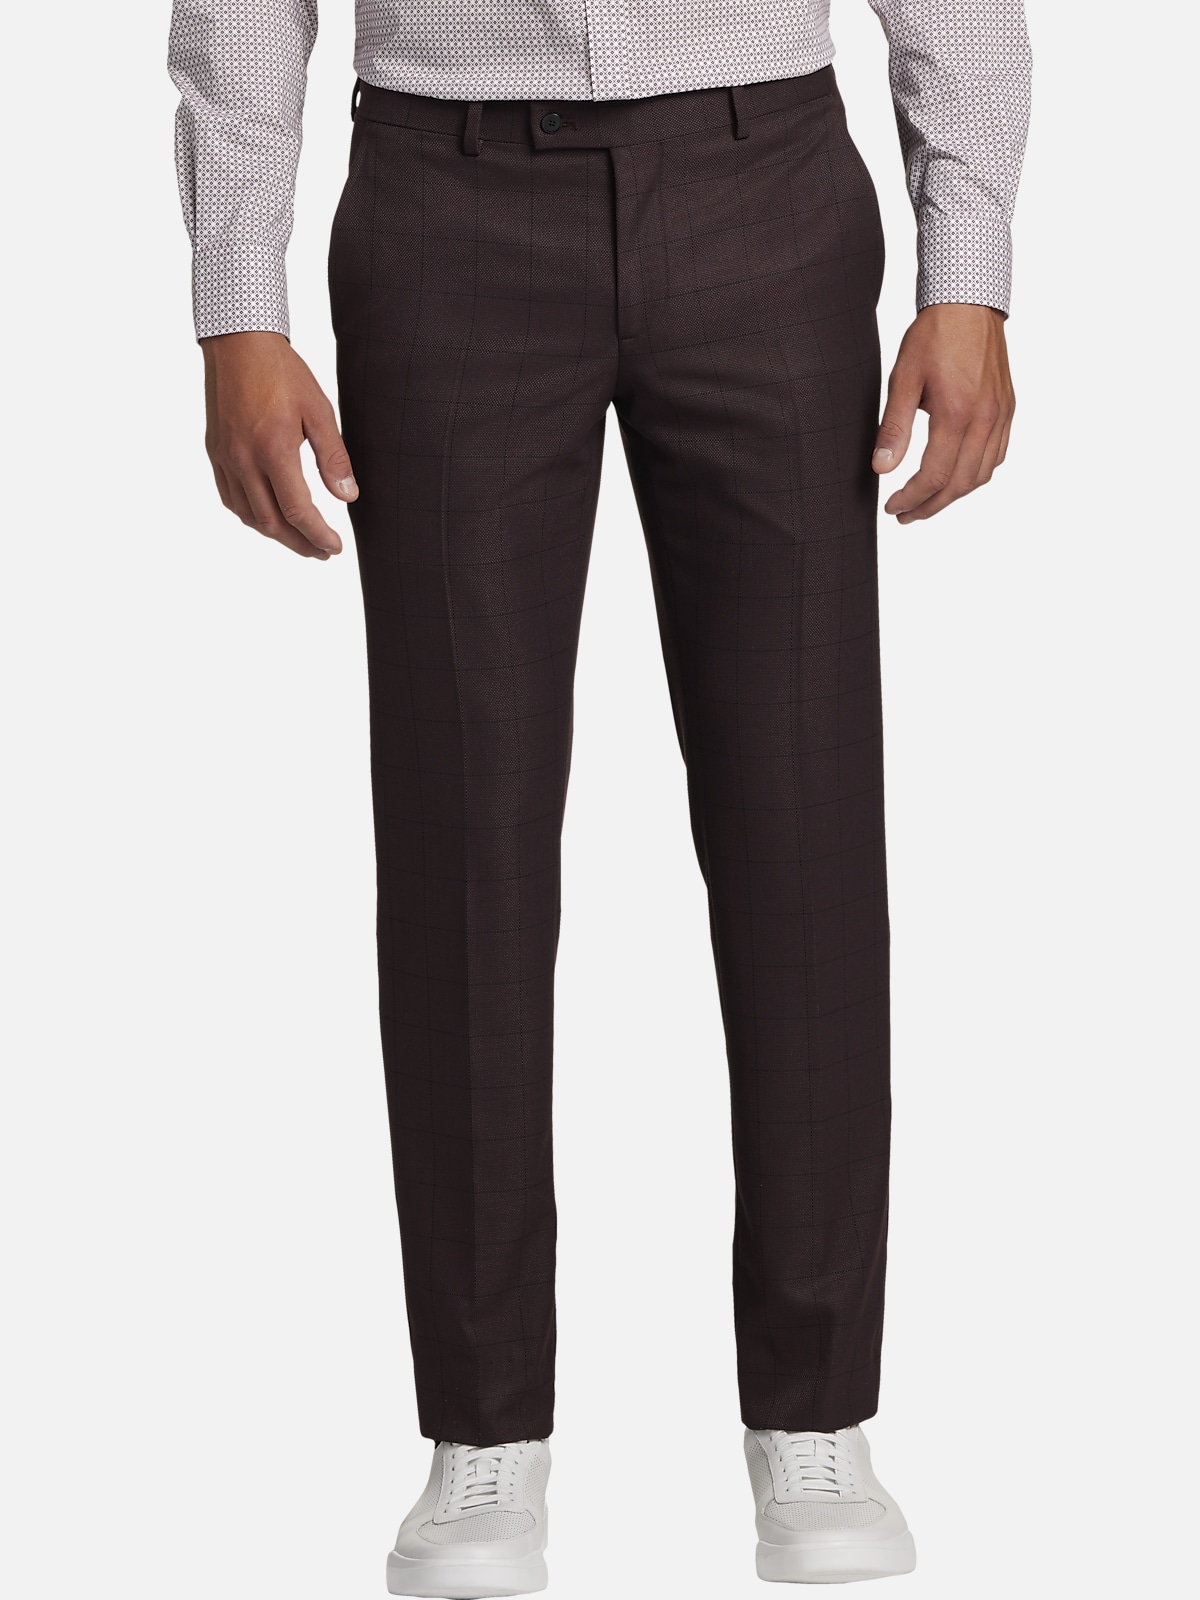 Egara Slim Fit Suit Separates Pants | All Clearance $39.99| Men's Wearhouse